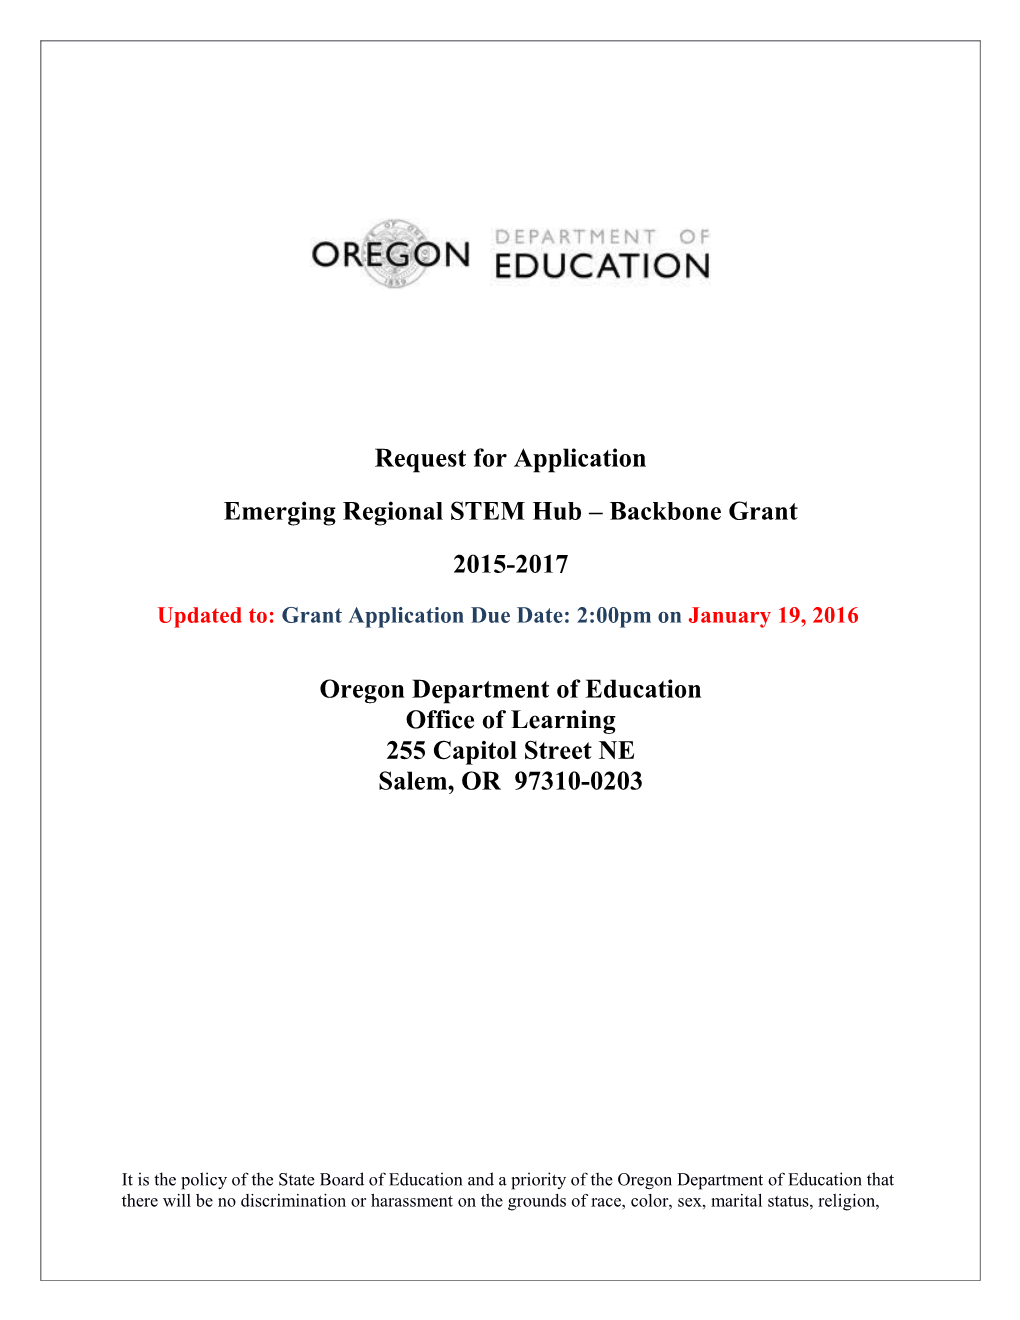 Emerging Regional STEM Hub Grant 2015-17 RFP